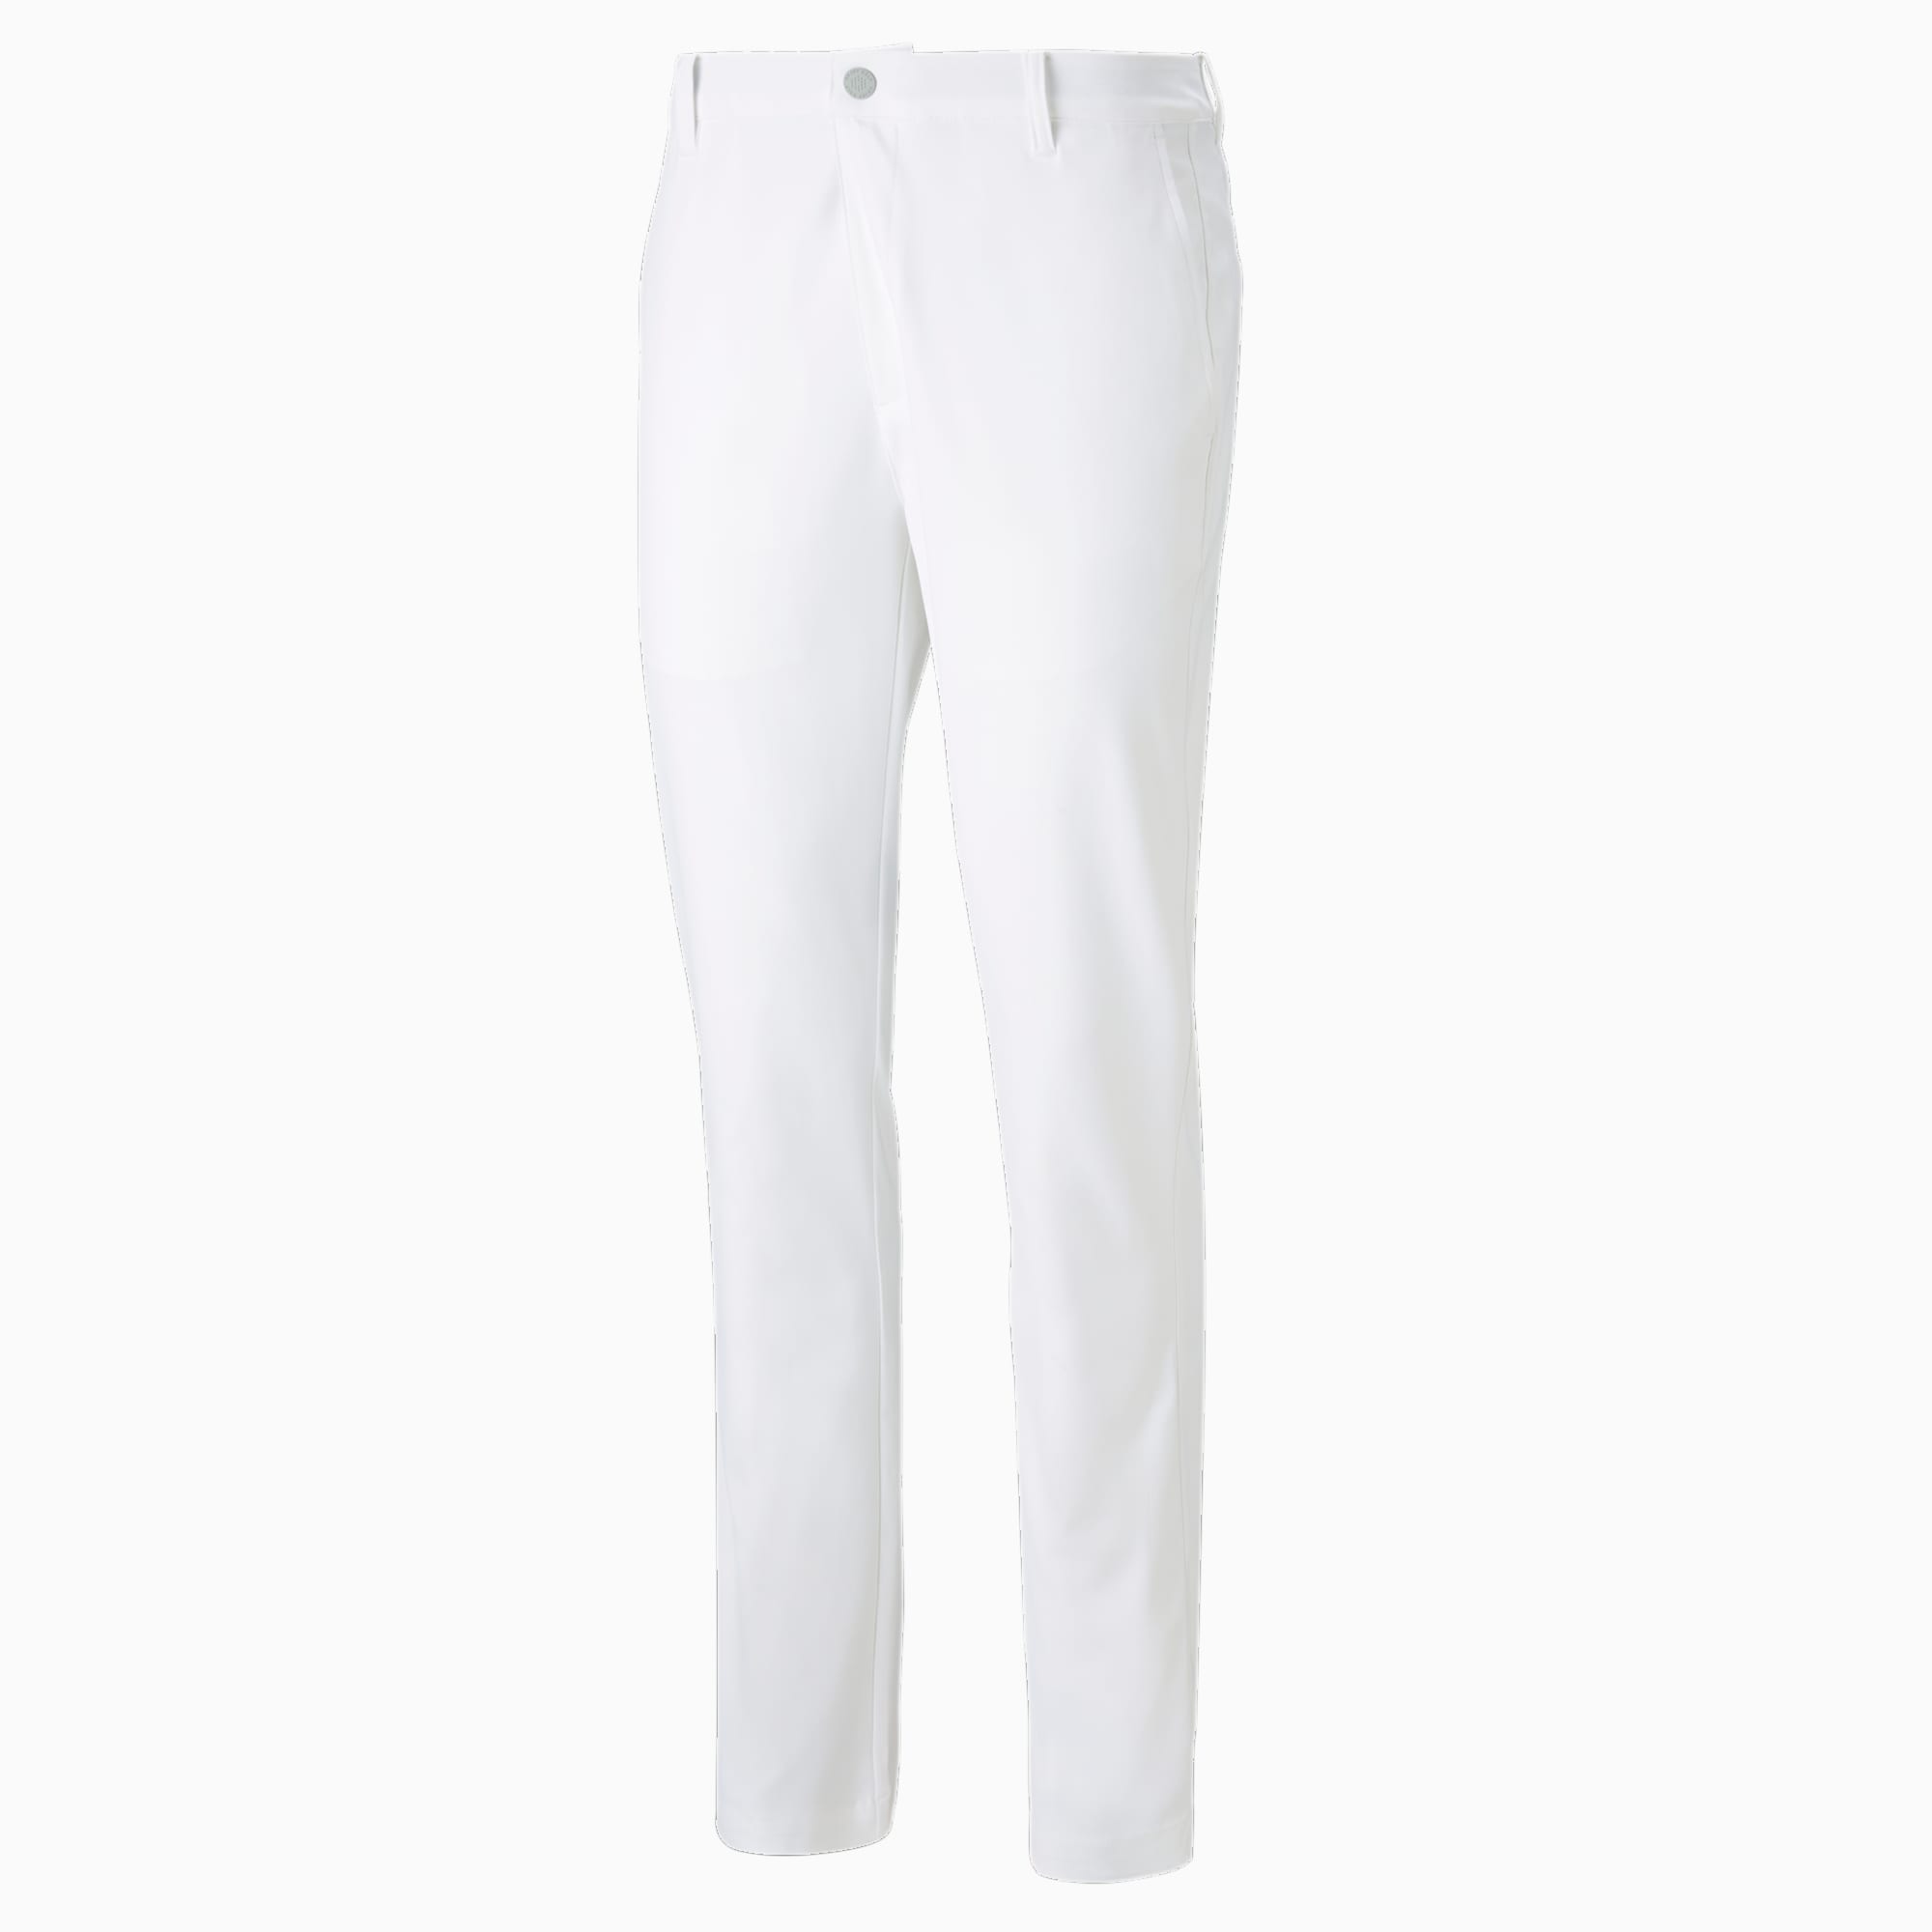 Pantaloni Da Golf Dealer Tailored Da Uomo, Bianco/Altro